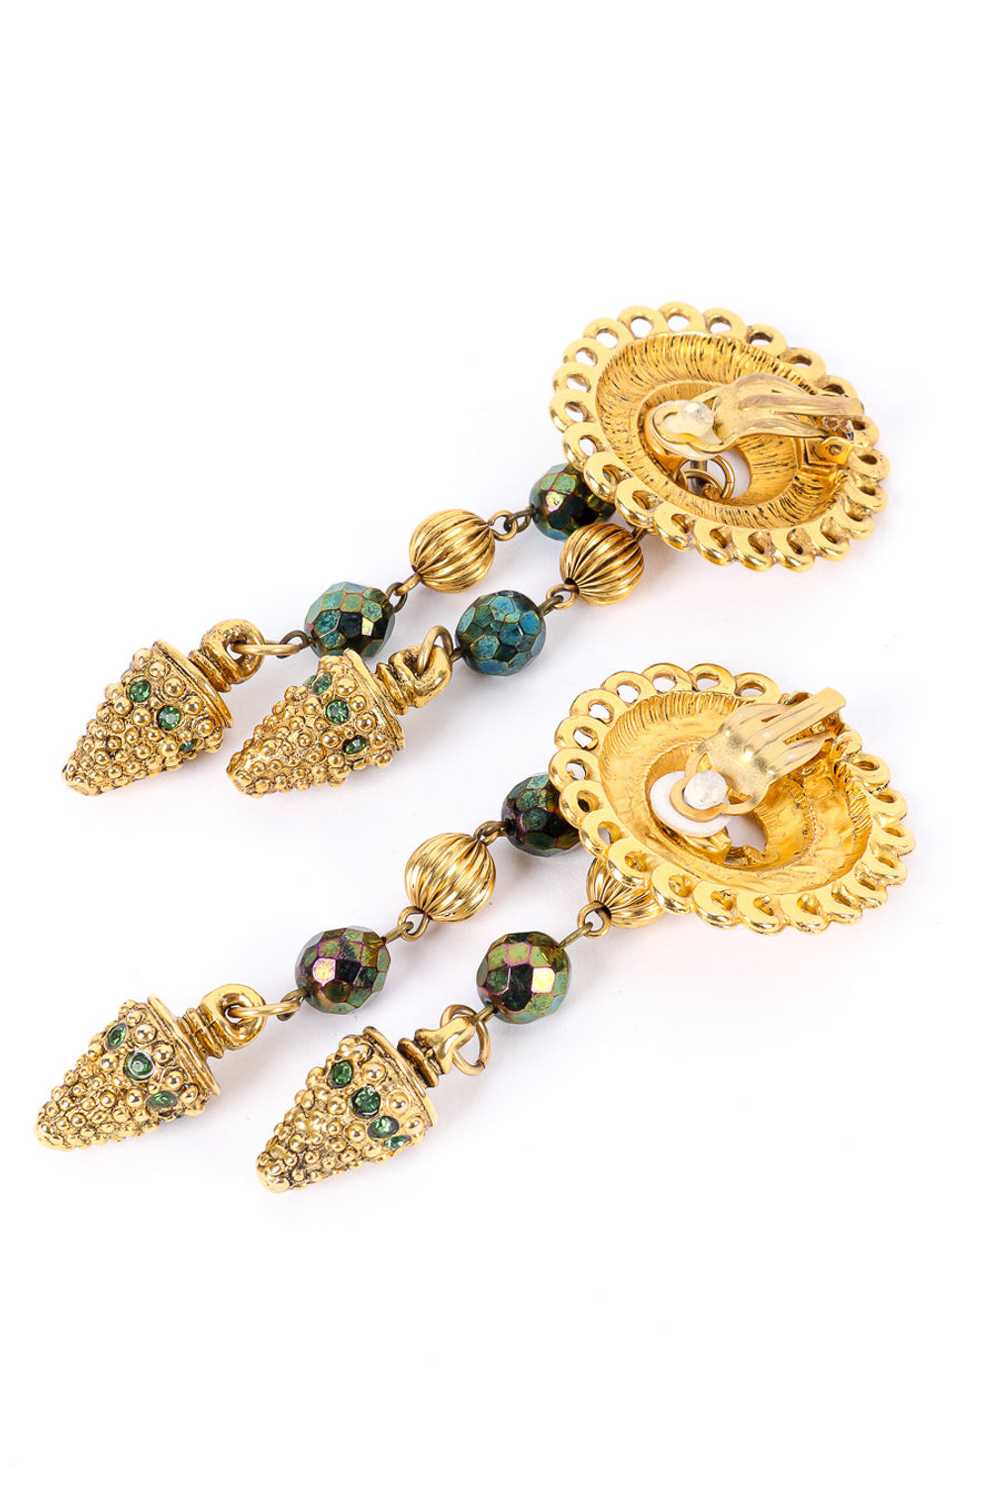 CLAIRE DEVE Byzantine Dangle Drop Earrings - image 5